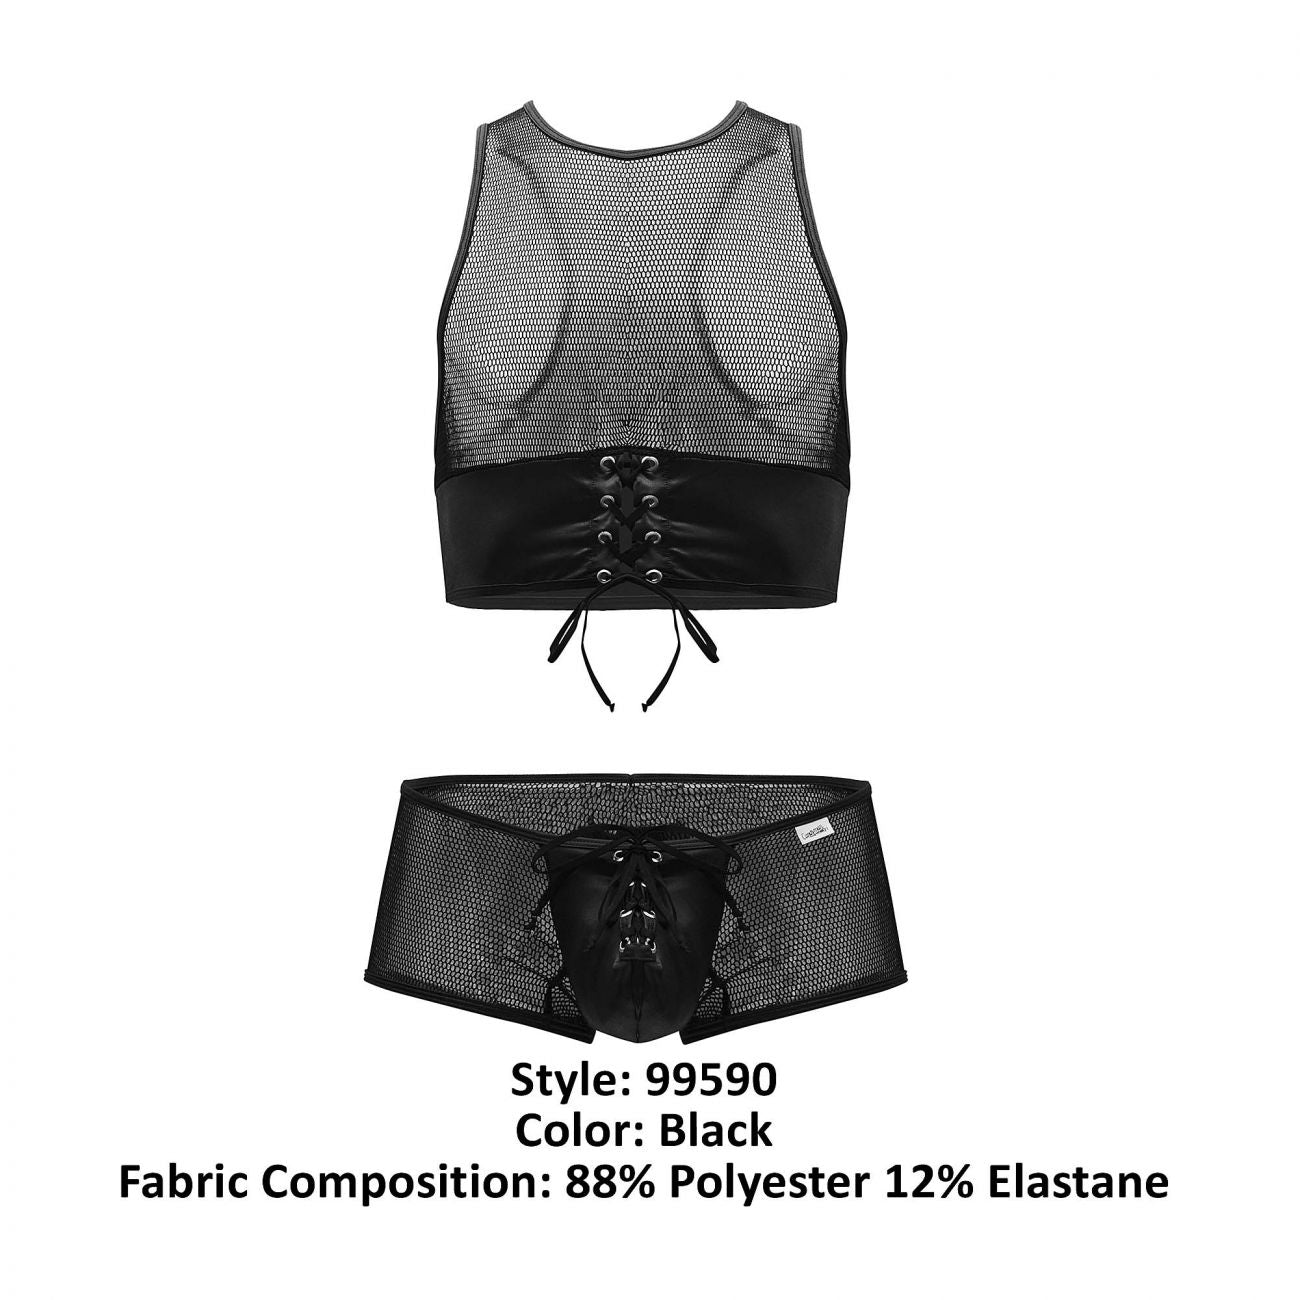 JCSTK - CandyMan 99590 Mesh Top-Trunks Outfit Black